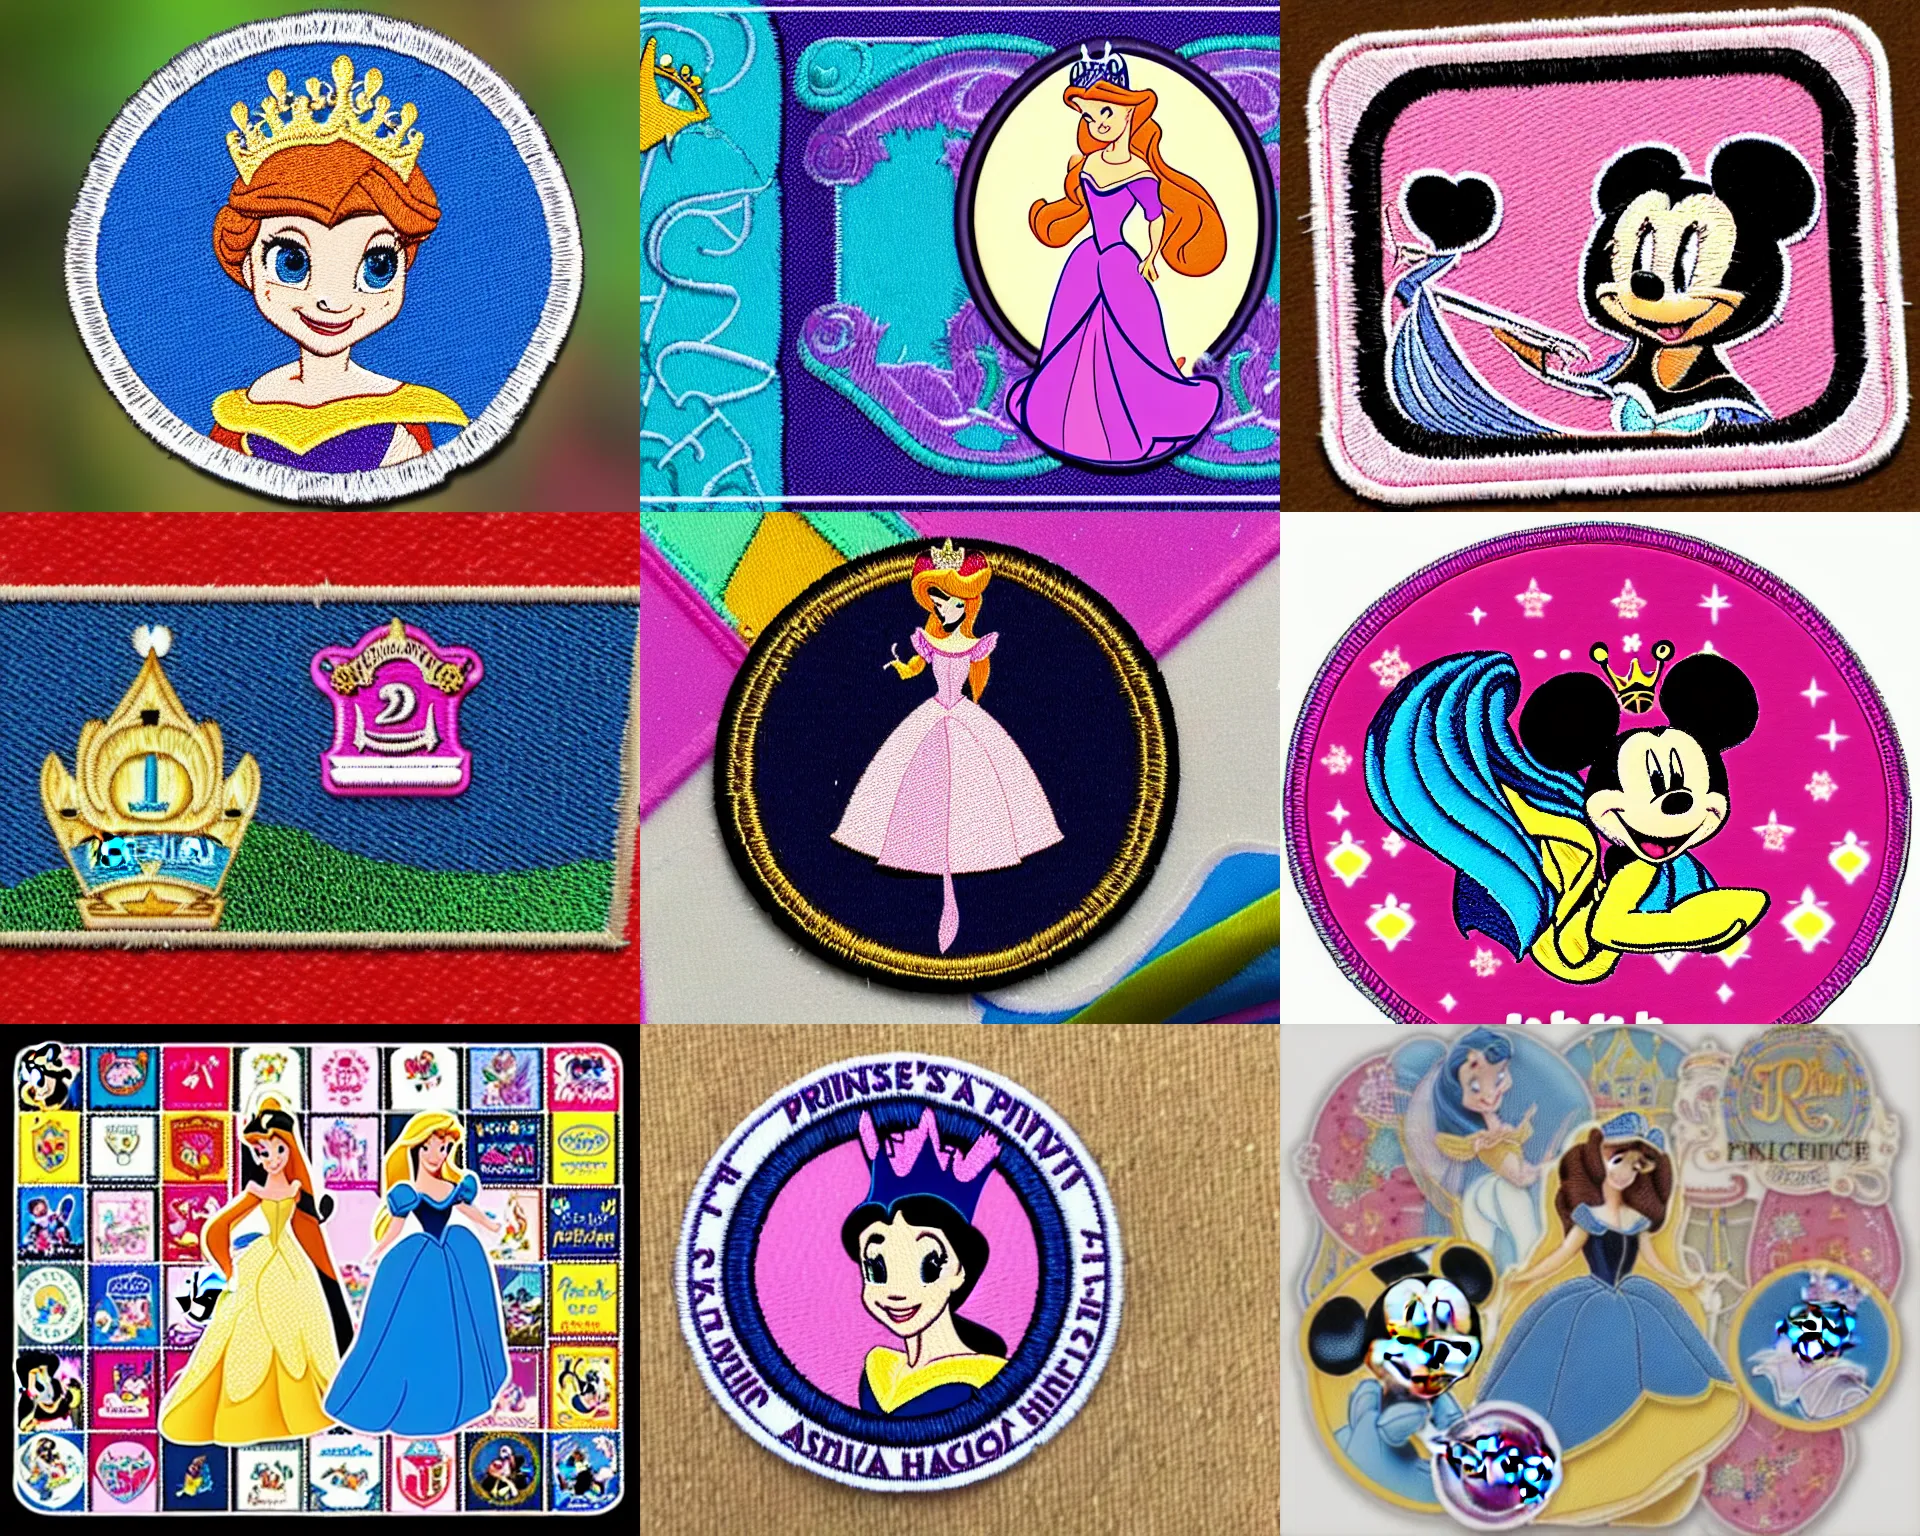 Prompt: disney's princess, old sticker patch, fabric crest, macro, contest winner 2021